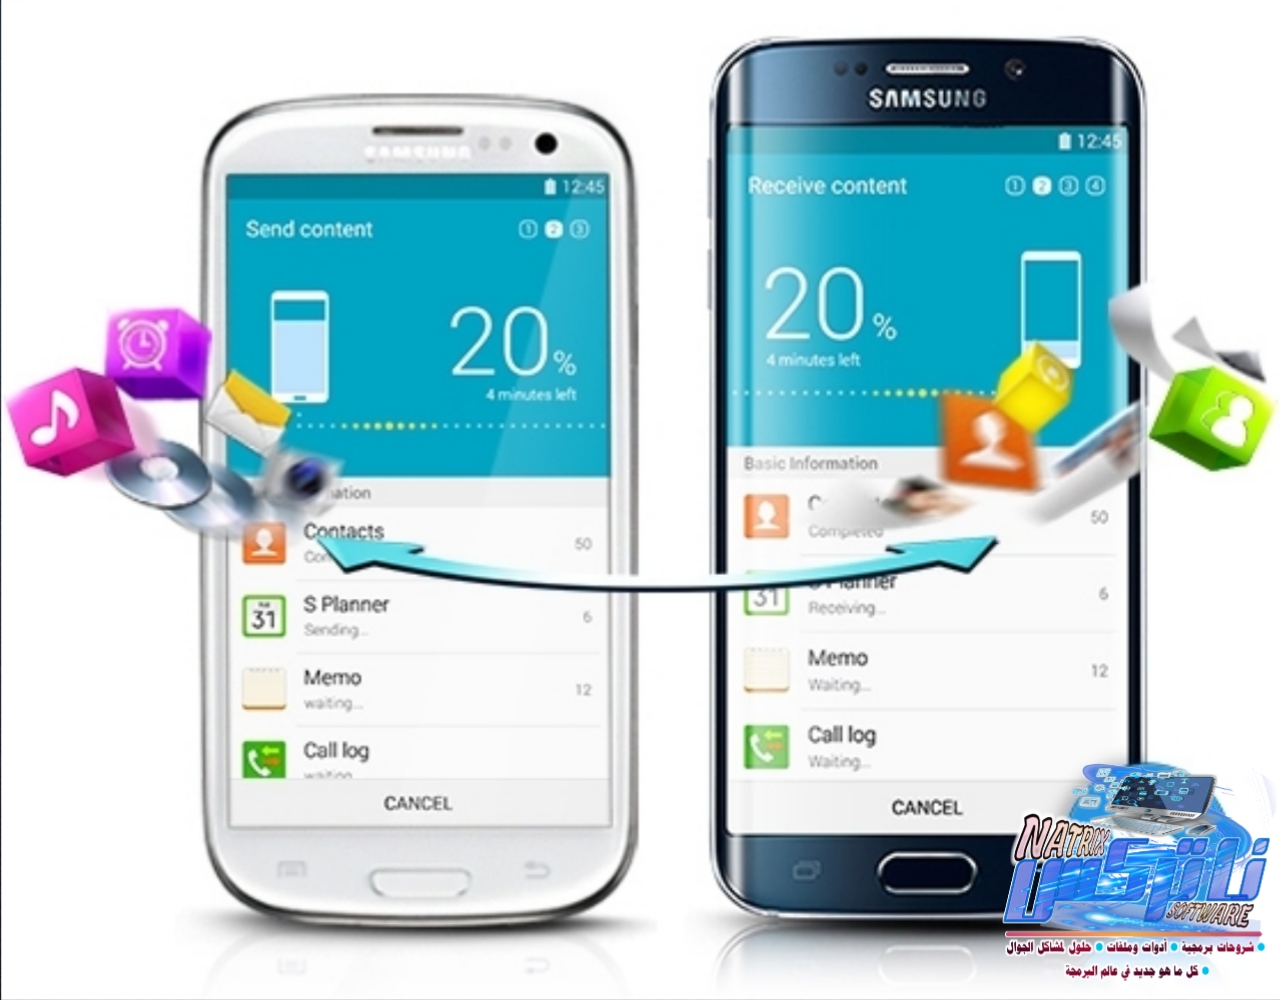 Samsung P Smart